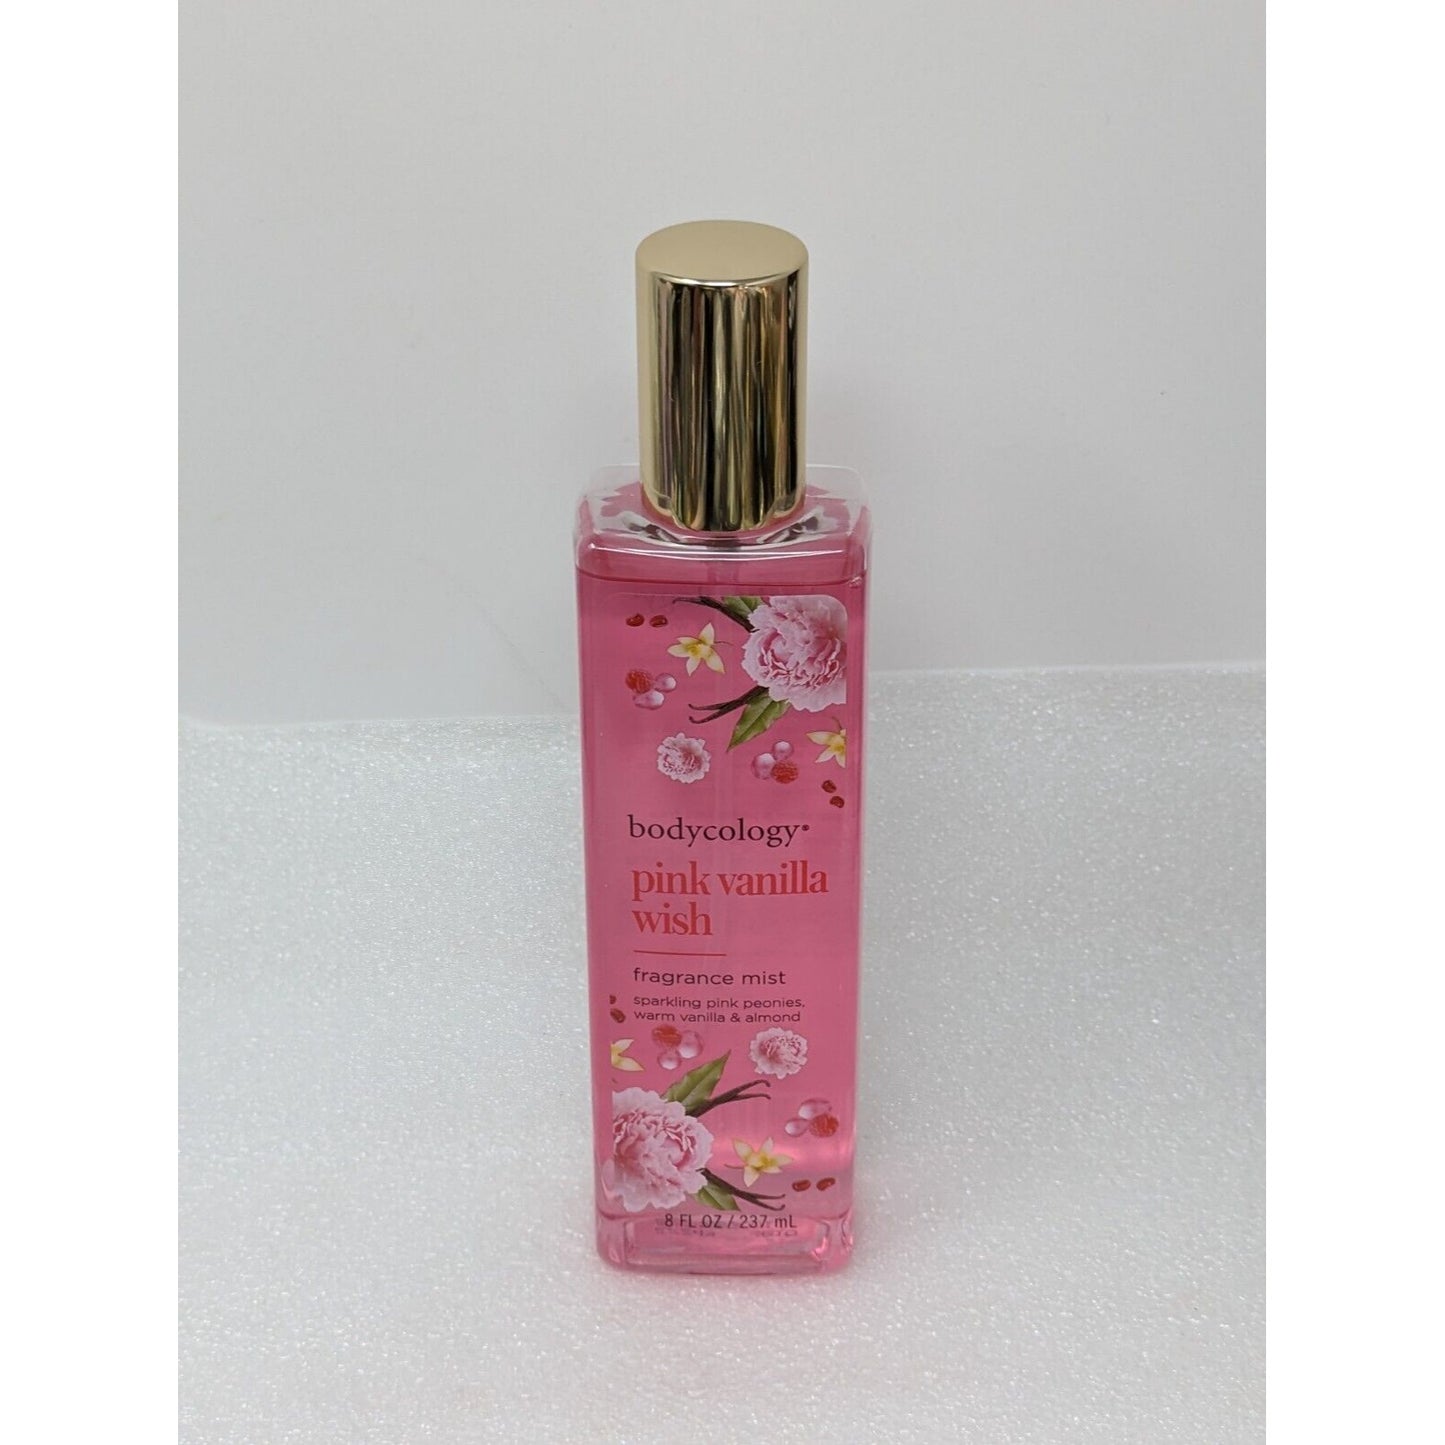 Bodycology Pink Vanilla Wish by Bodycology Fragrance Mist Spray 8 oz Women